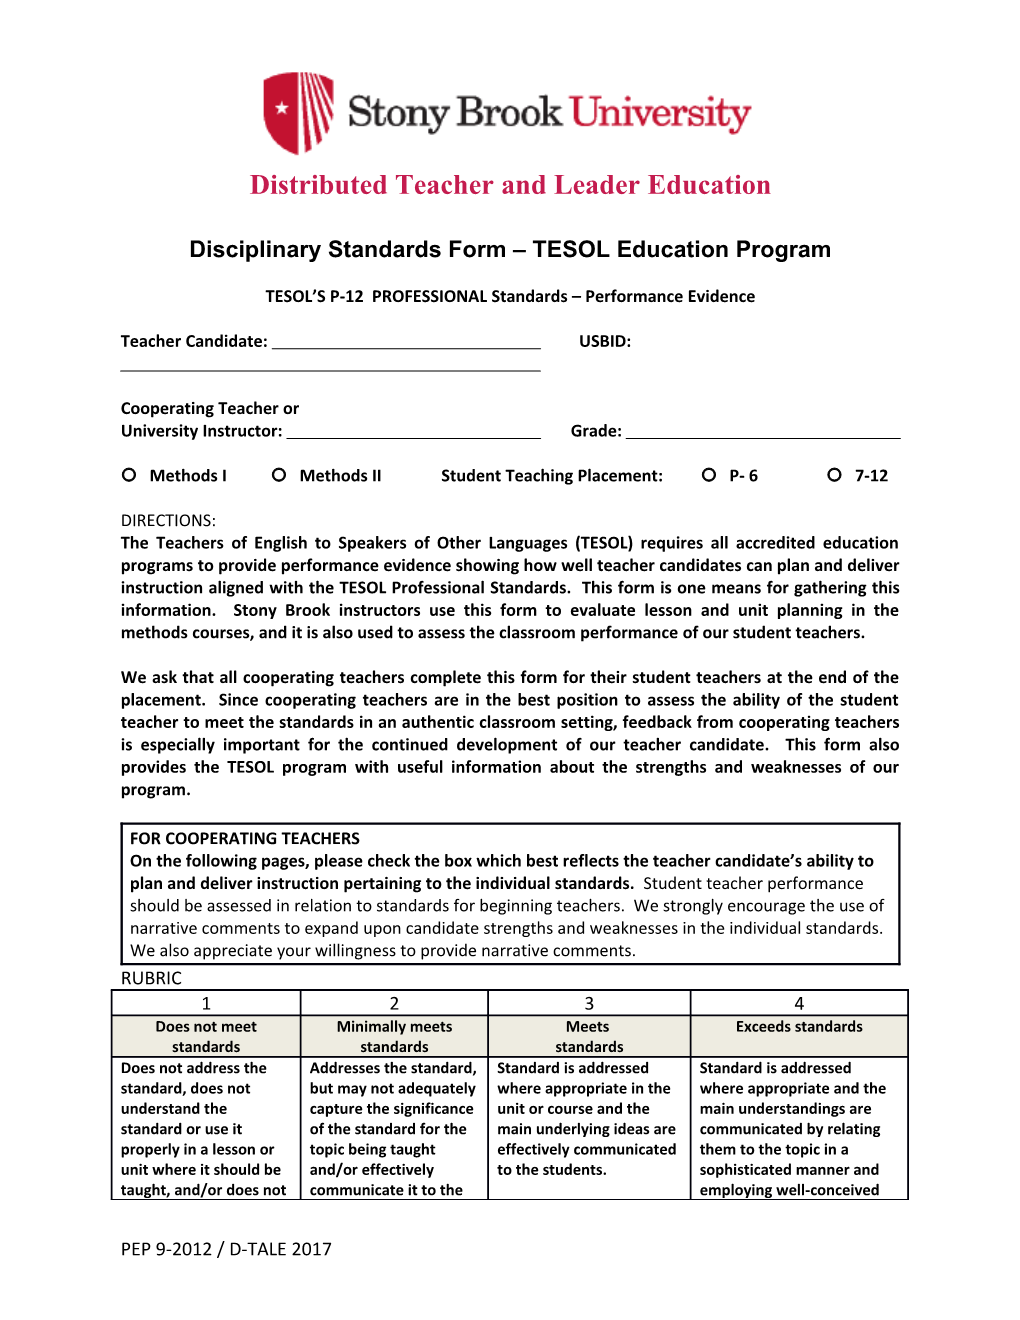 Tesol Disciplinary Standards Form (Dsf)